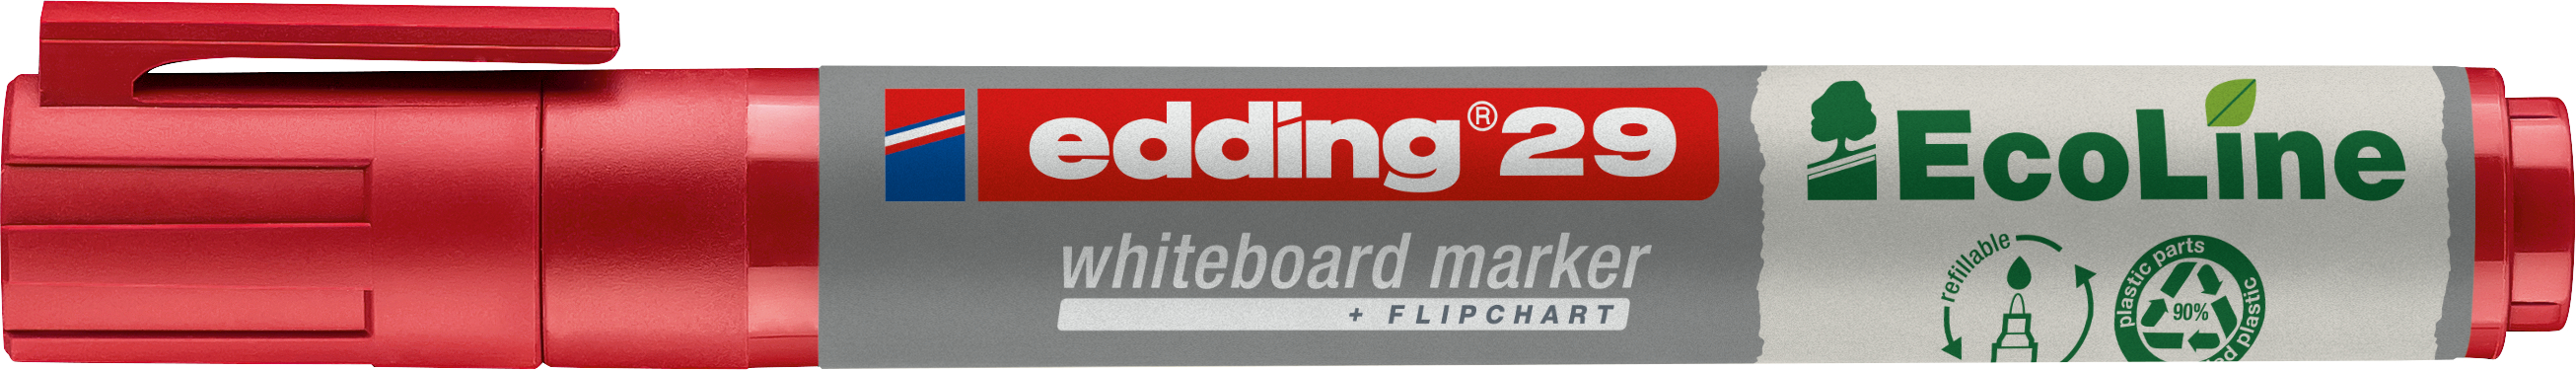 EDDING Whiteboard Marker 29 1-5mm 29-2 rouge rouge